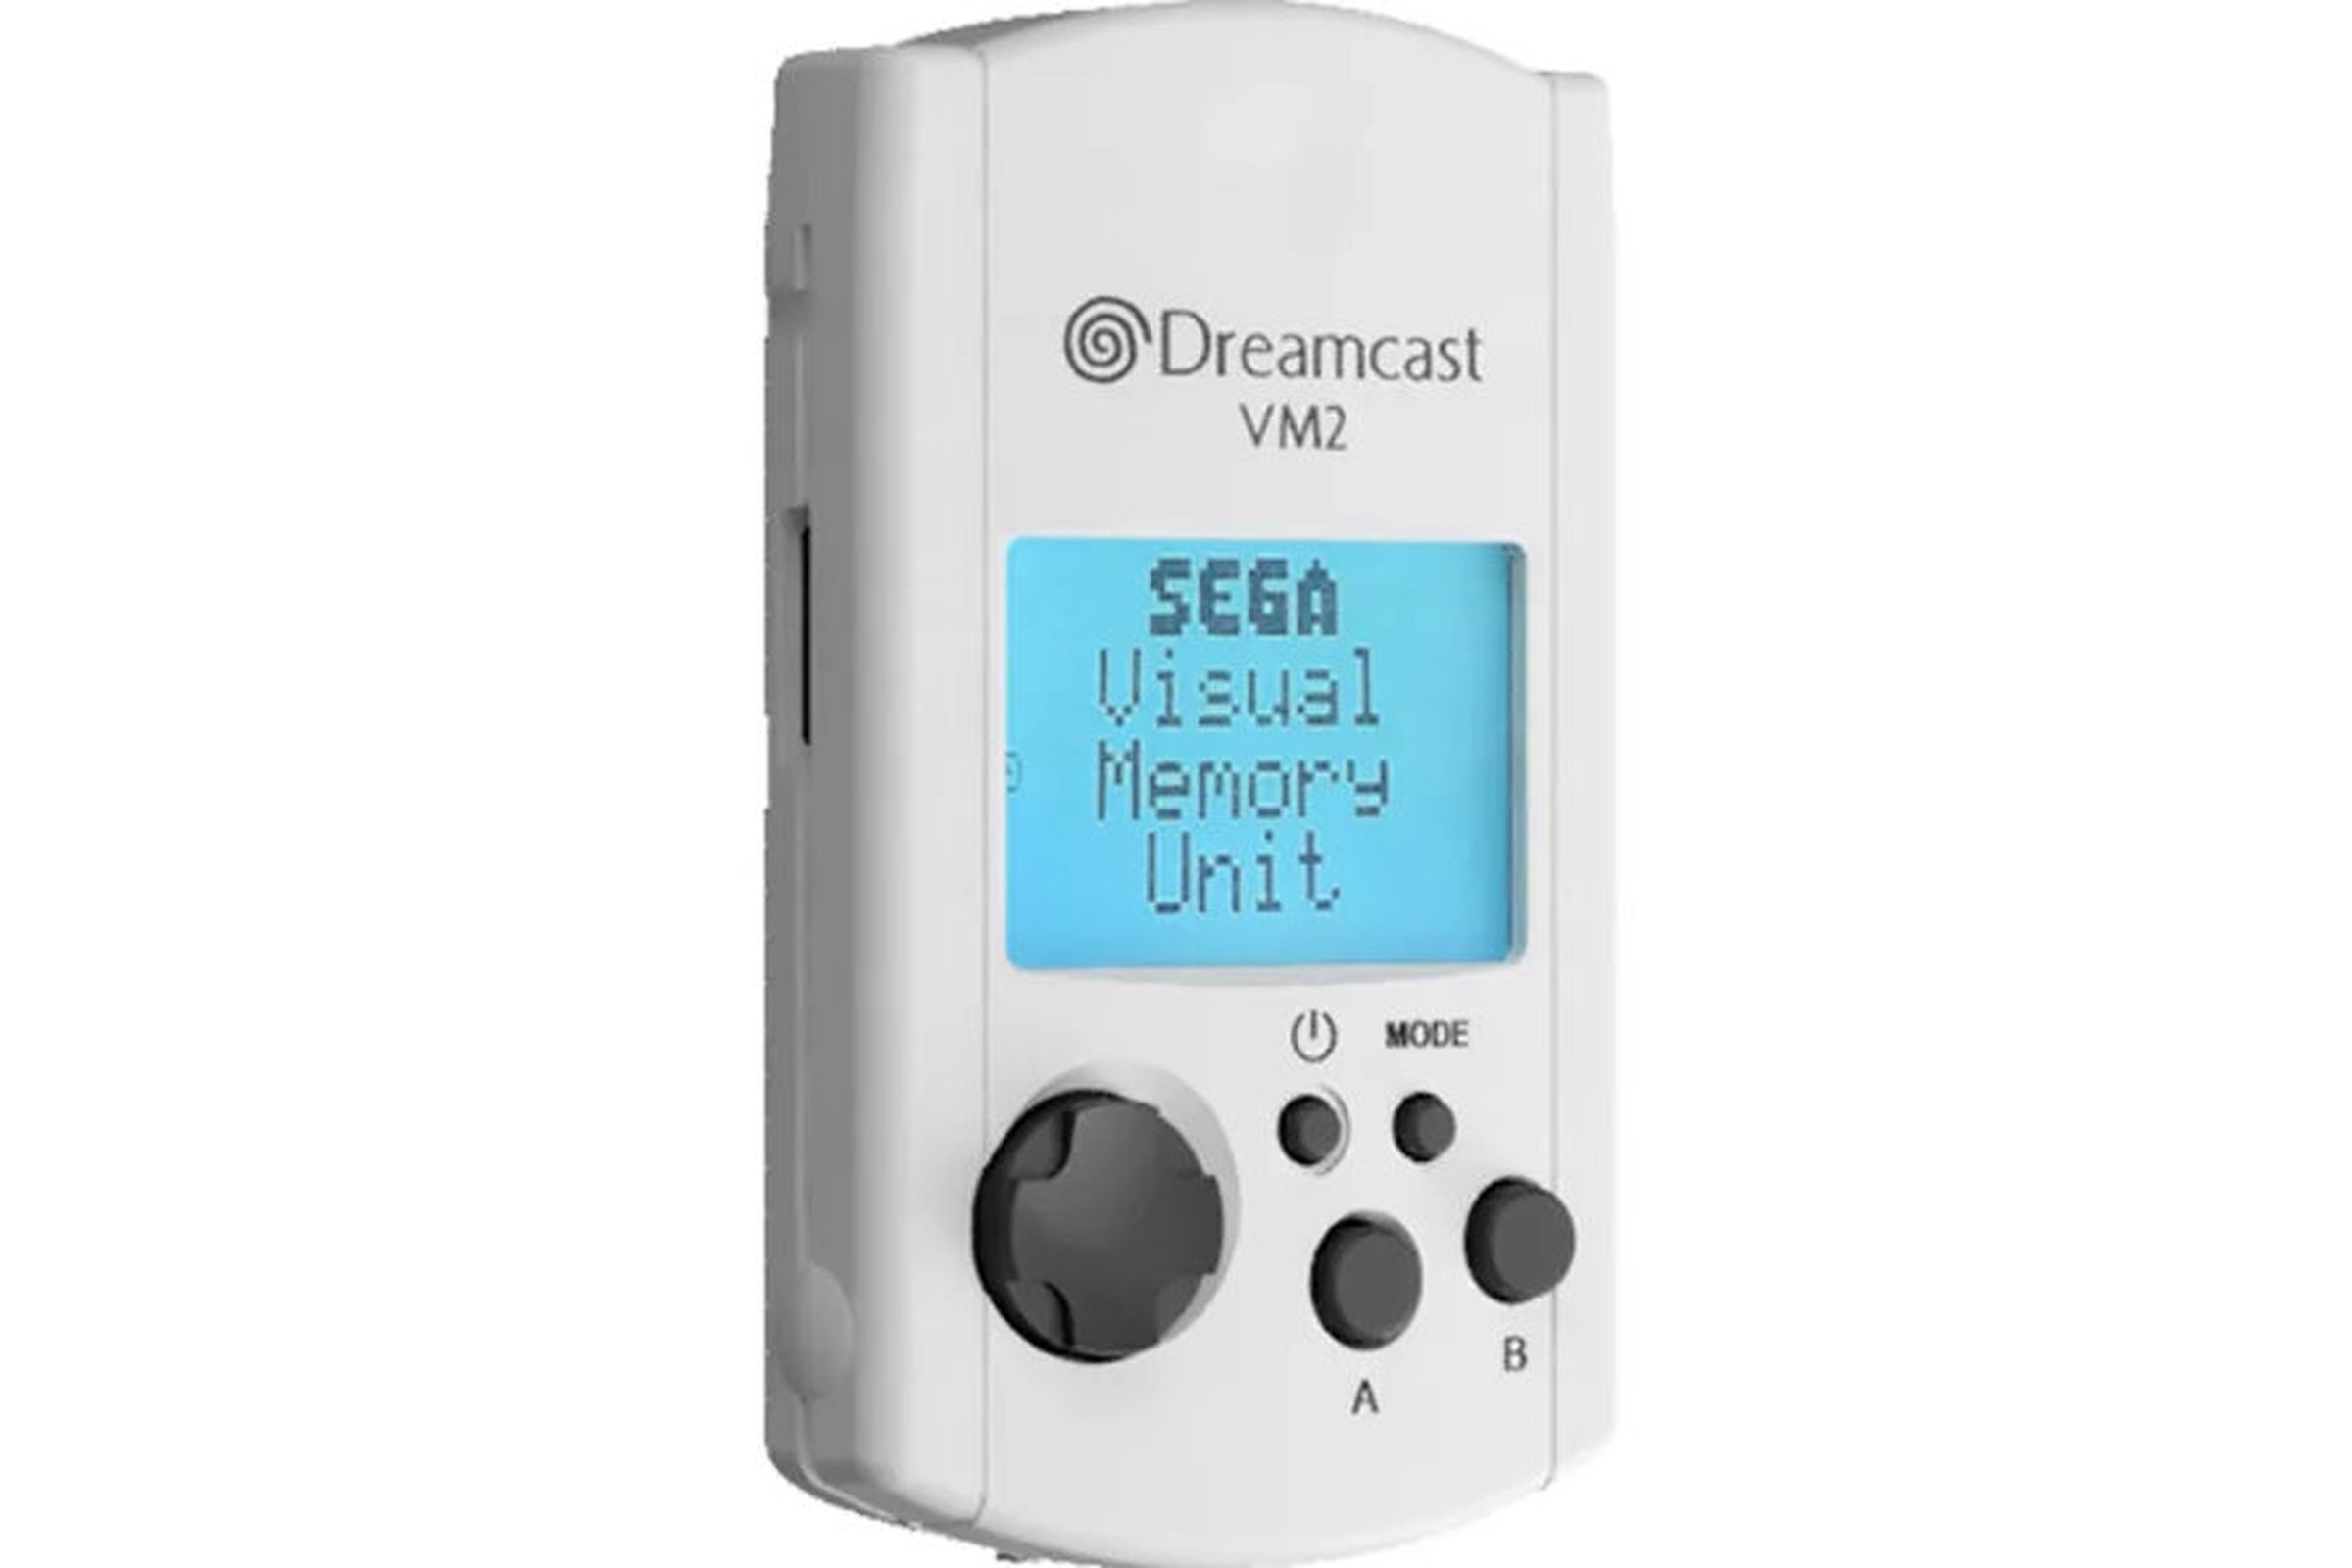 A screenshot showing the VM2, a modern recreation of Sega’s original Dreamcast virtual memory unit.